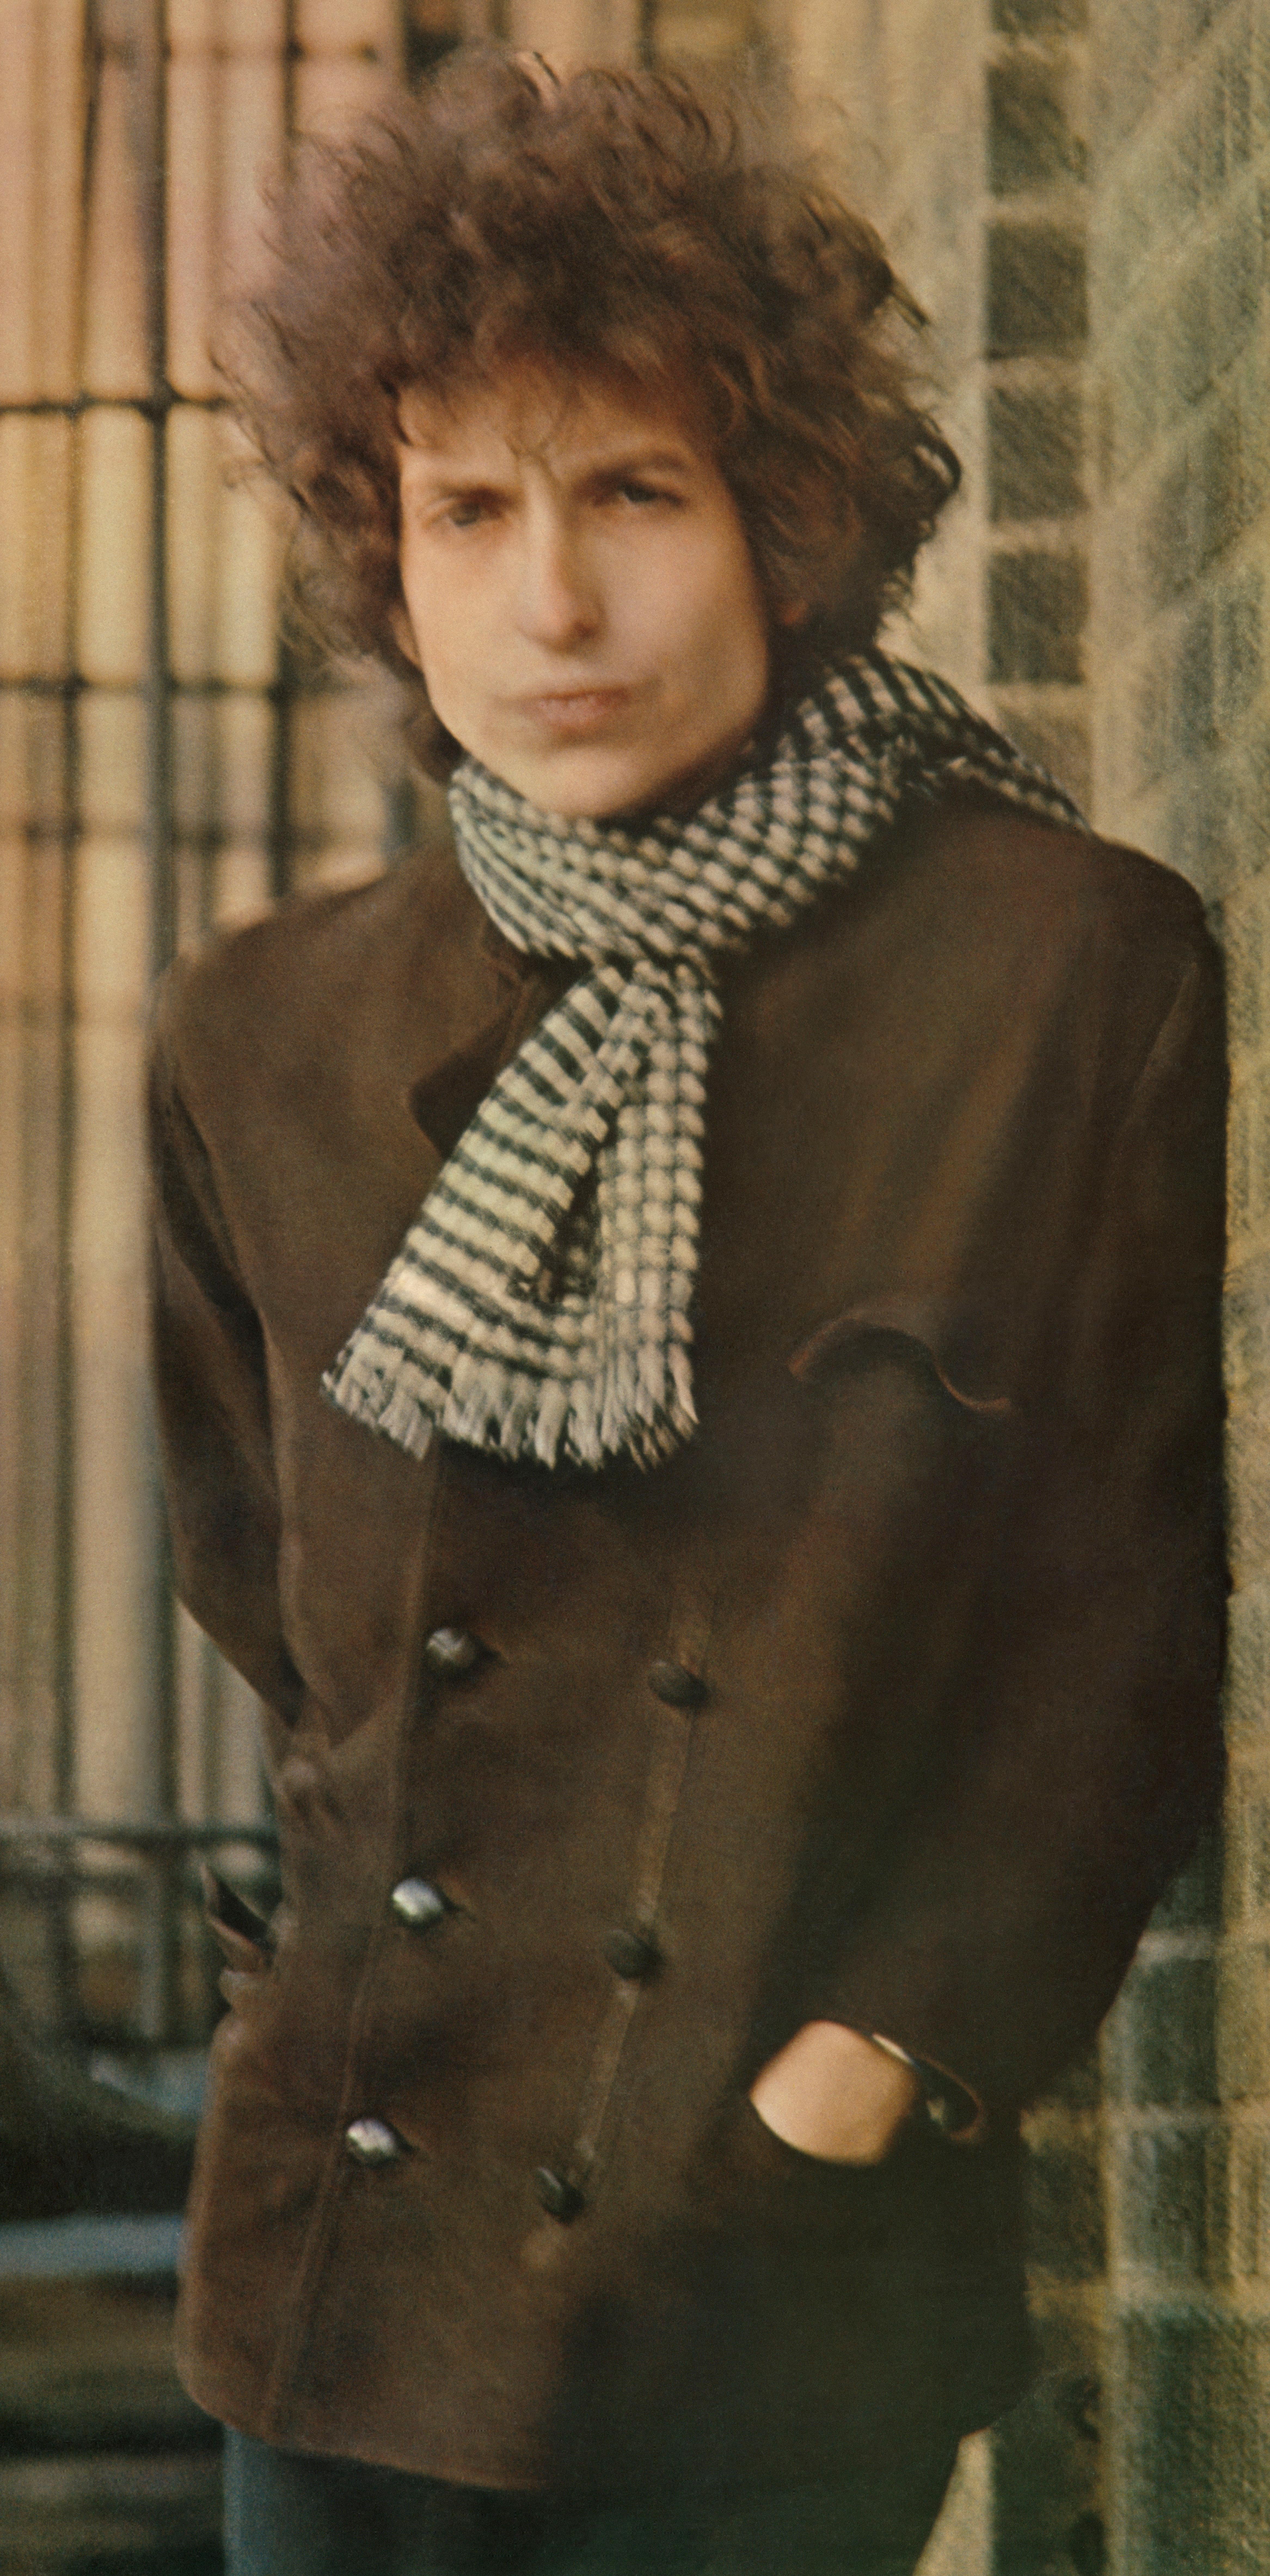 Jerry Schatzberg Color Photograph - Bob Dylan, Blonde on Blonde, New York, 1966